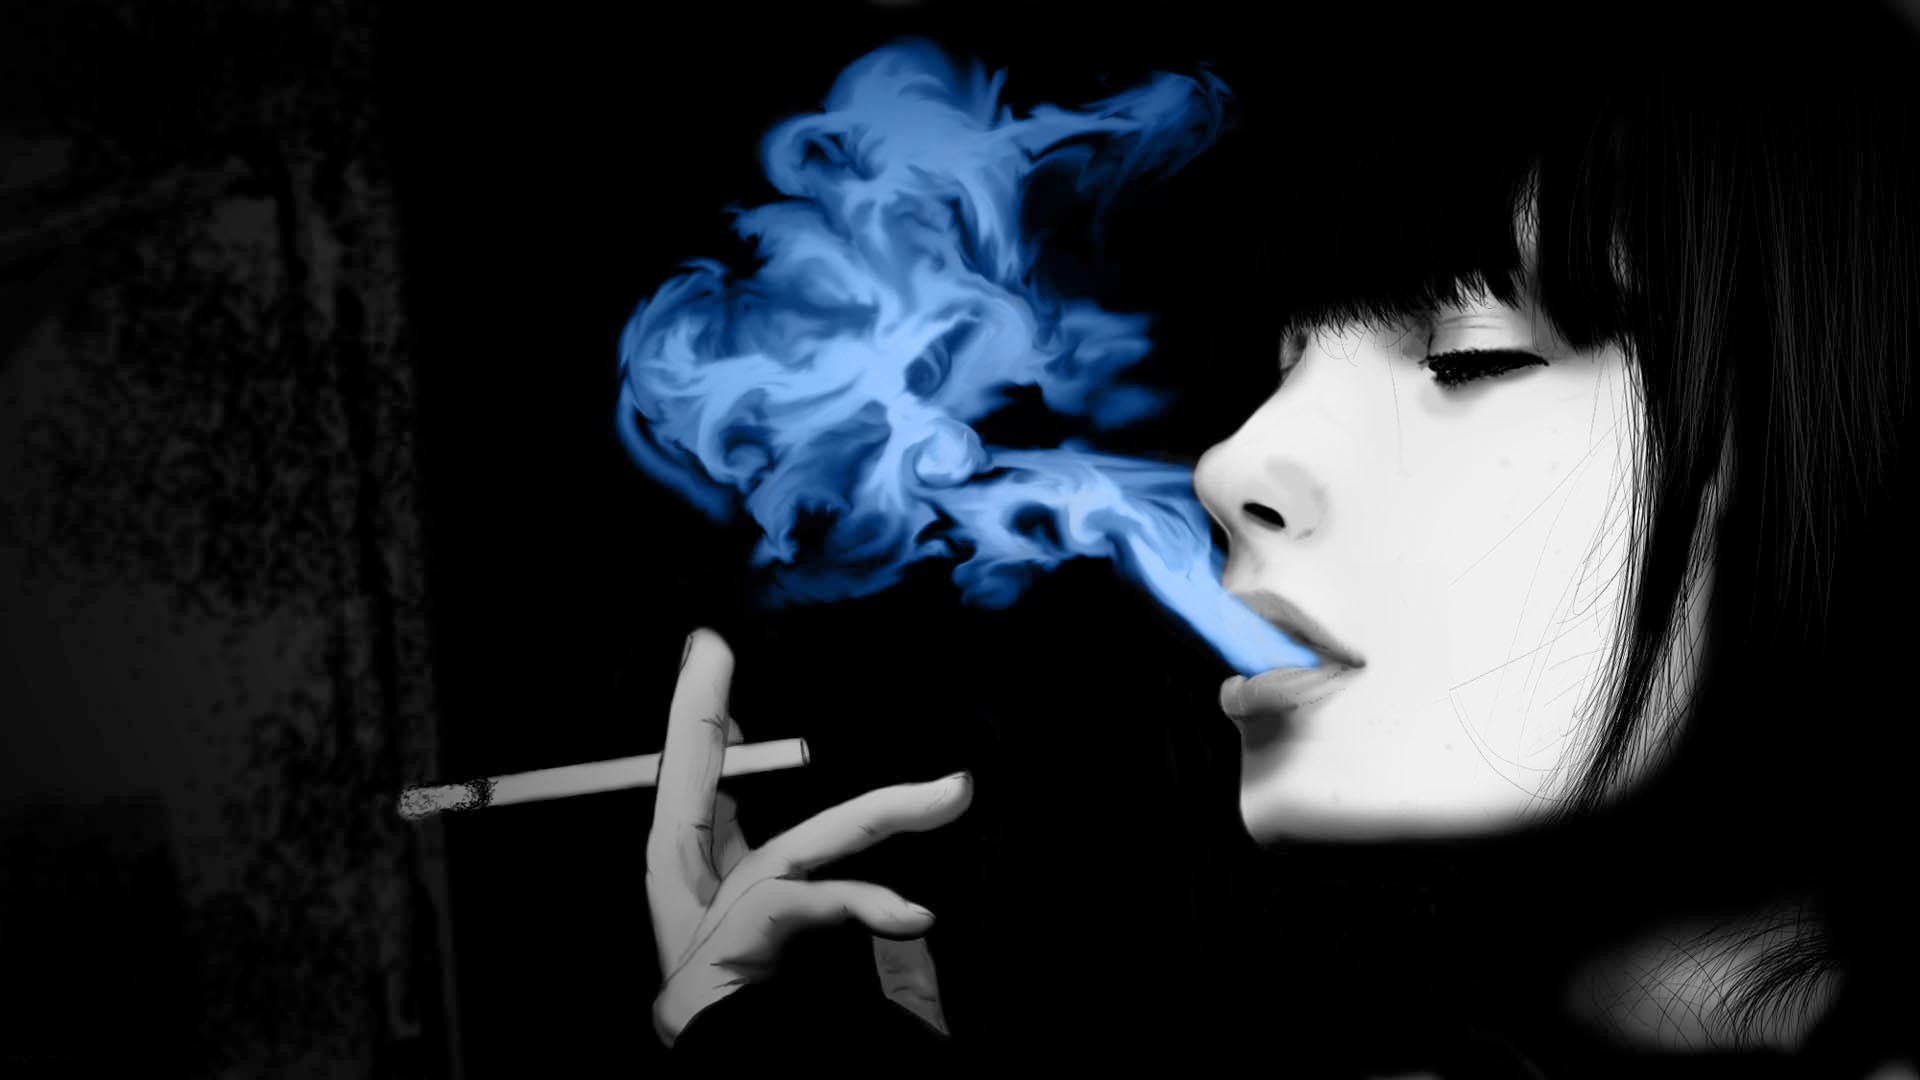 533514 1280x1024 monochrome women cigarettes smoke smoking wallpaper JPG 94  kB  Rare Gallery HD Wallpapers